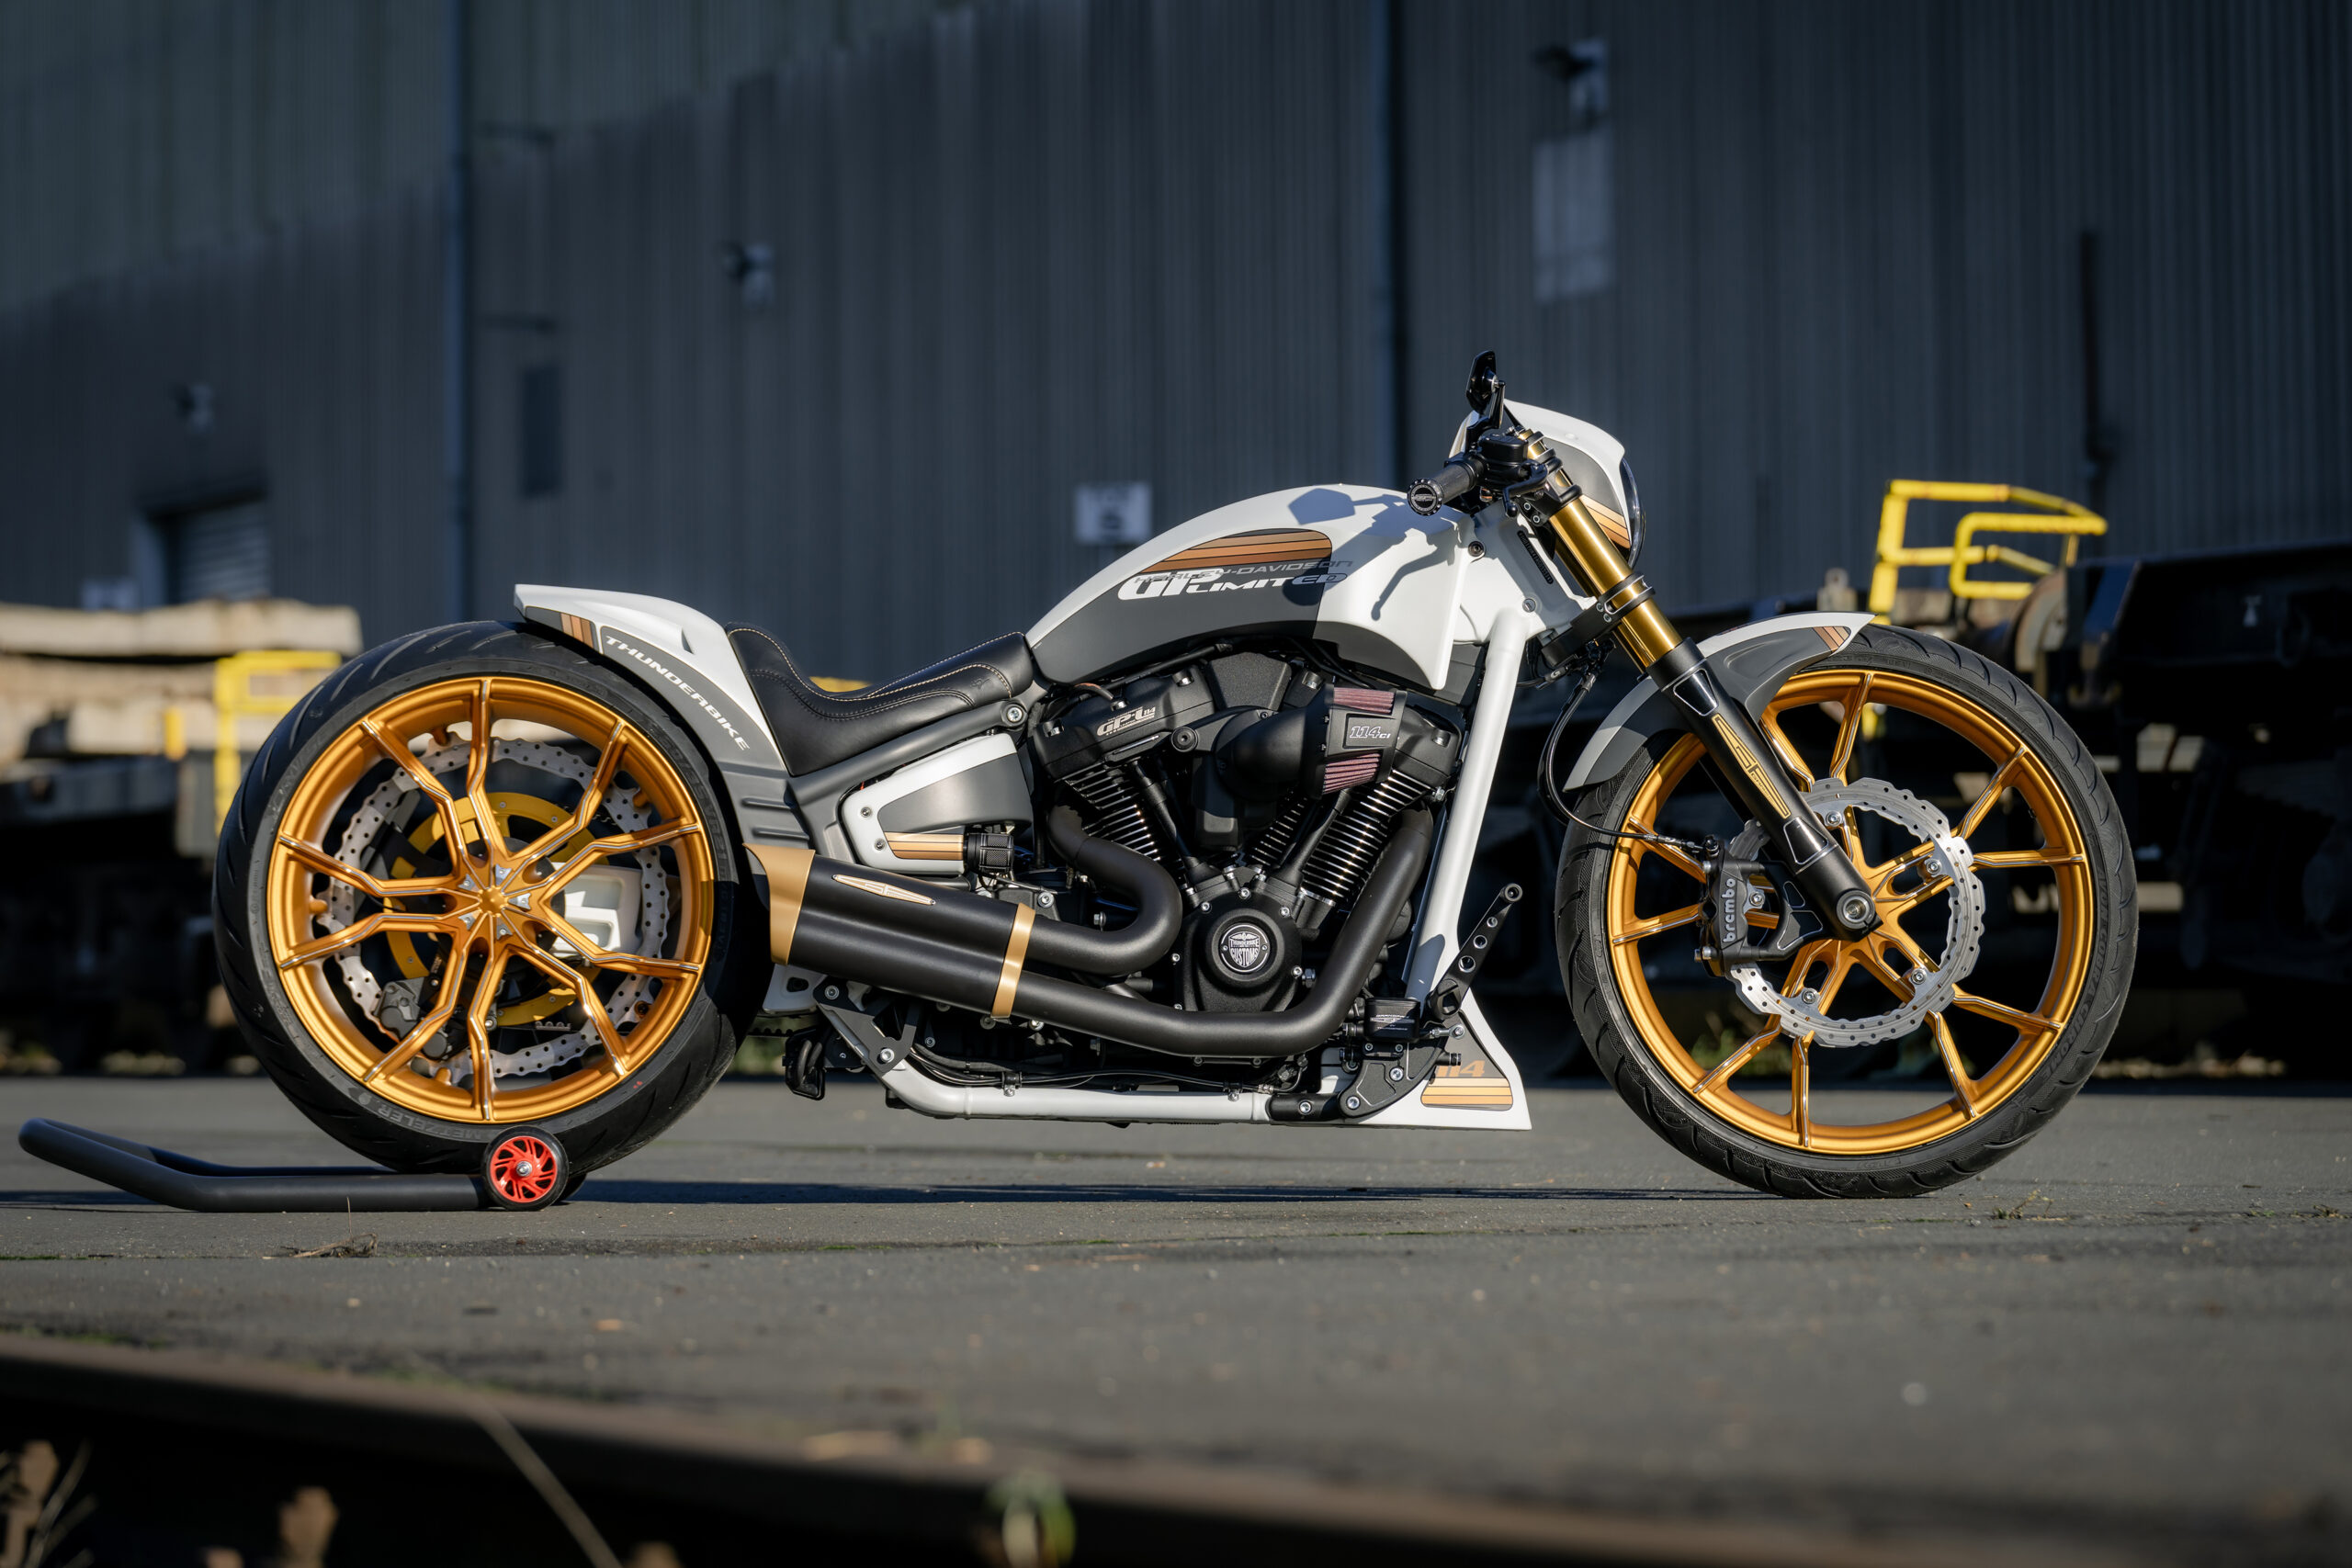 Harley-Davidson Zündspulen im Thunderbike Shop